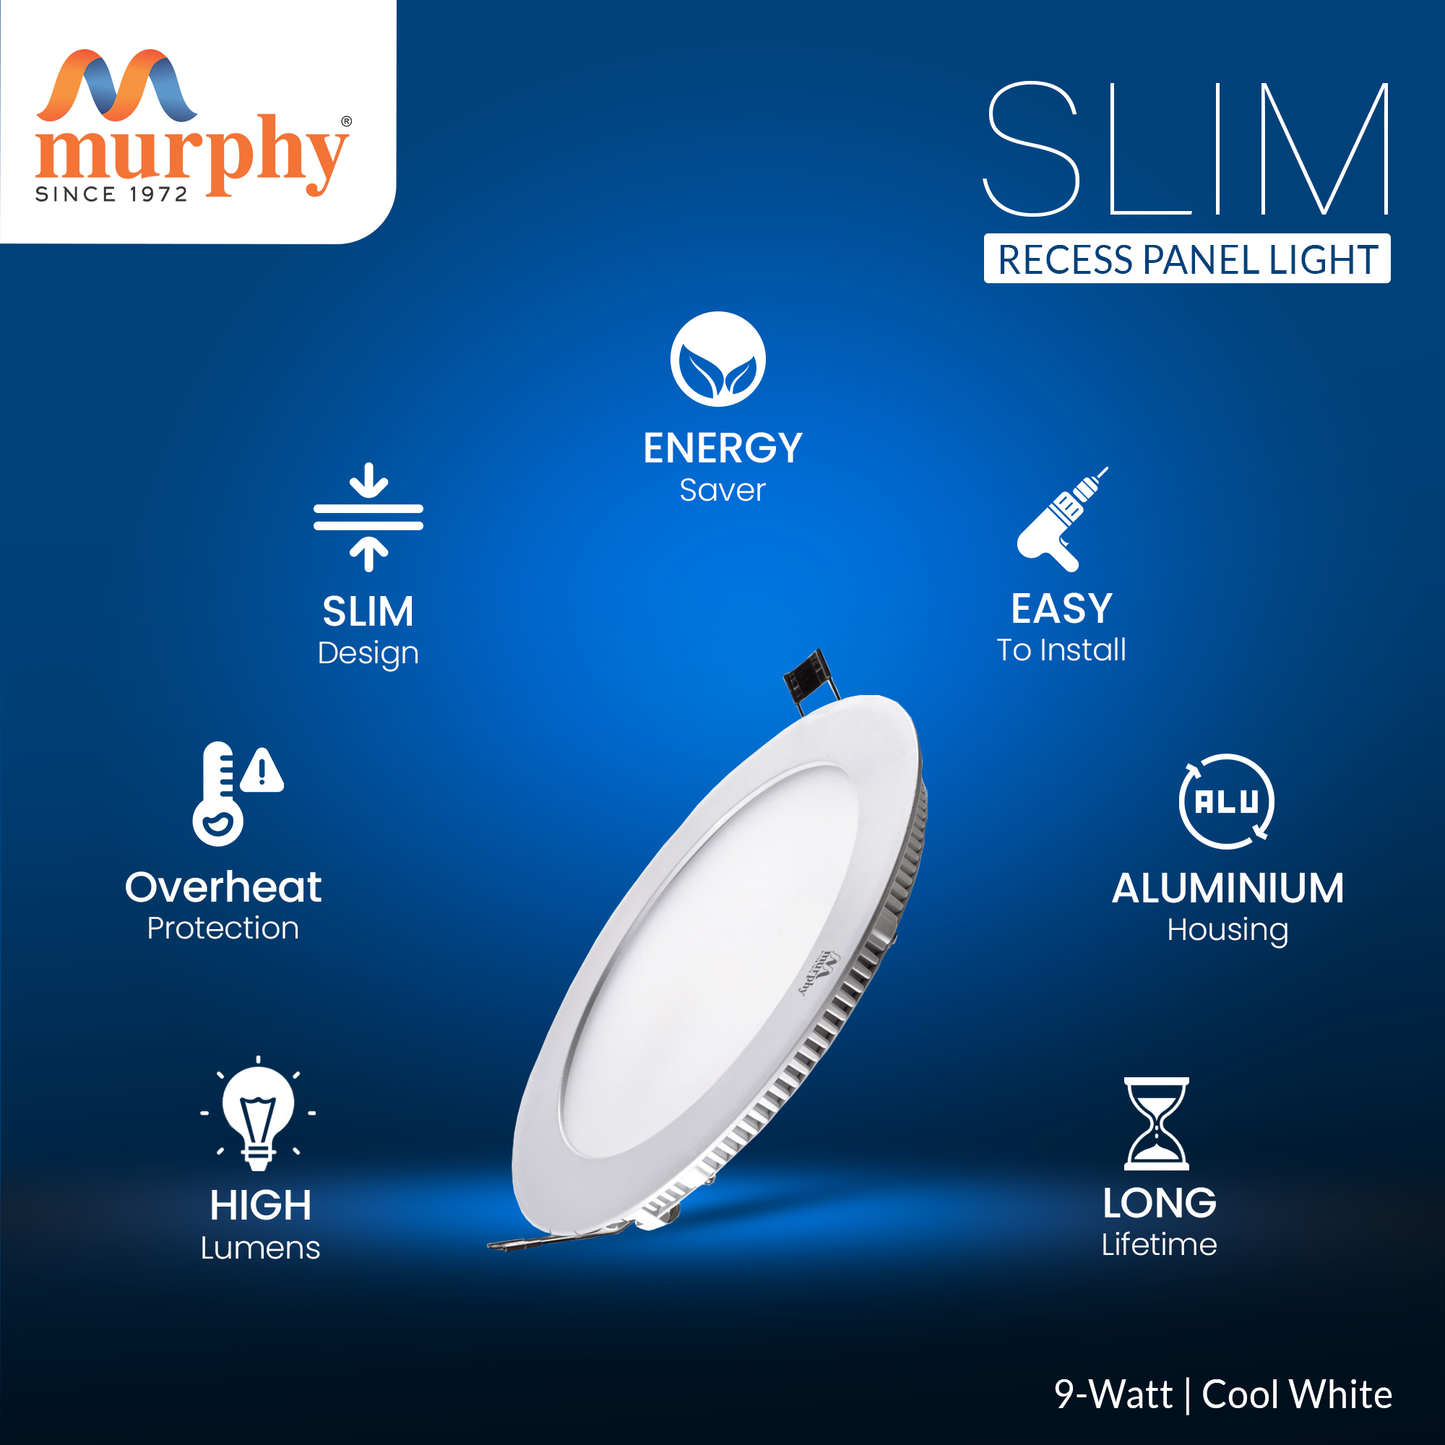 Murphy 9W Slim Round Recess Panel Light